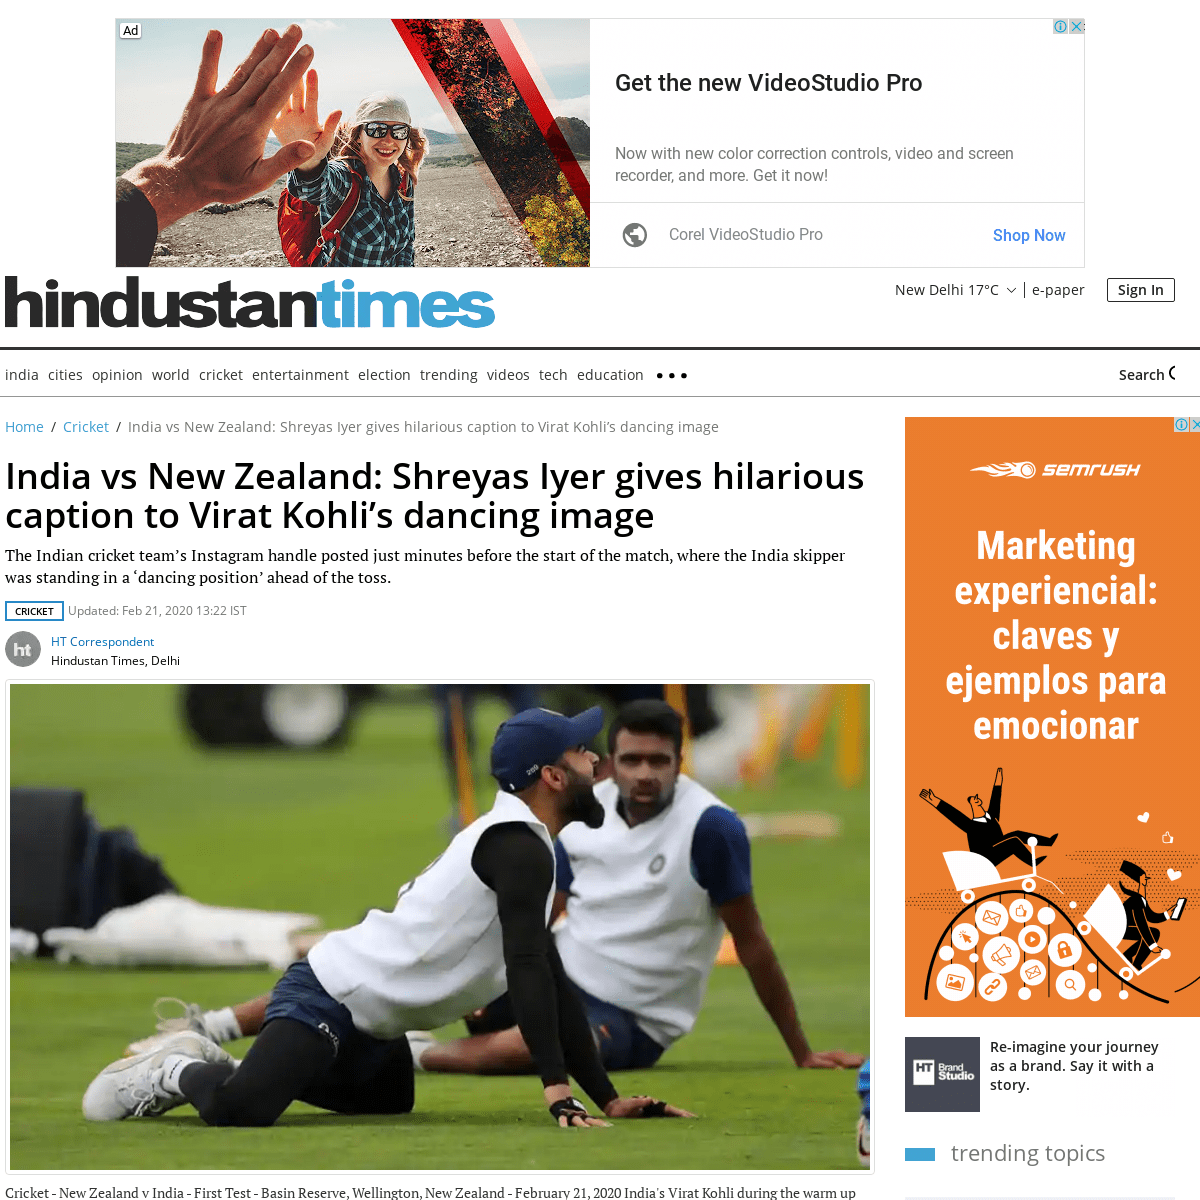 A complete backup of www.hindustantimes.com/cricket/india-vs-new-zealand-shreyas-iyer-gives-hilarious-caption-to-virat-kohli-s-d